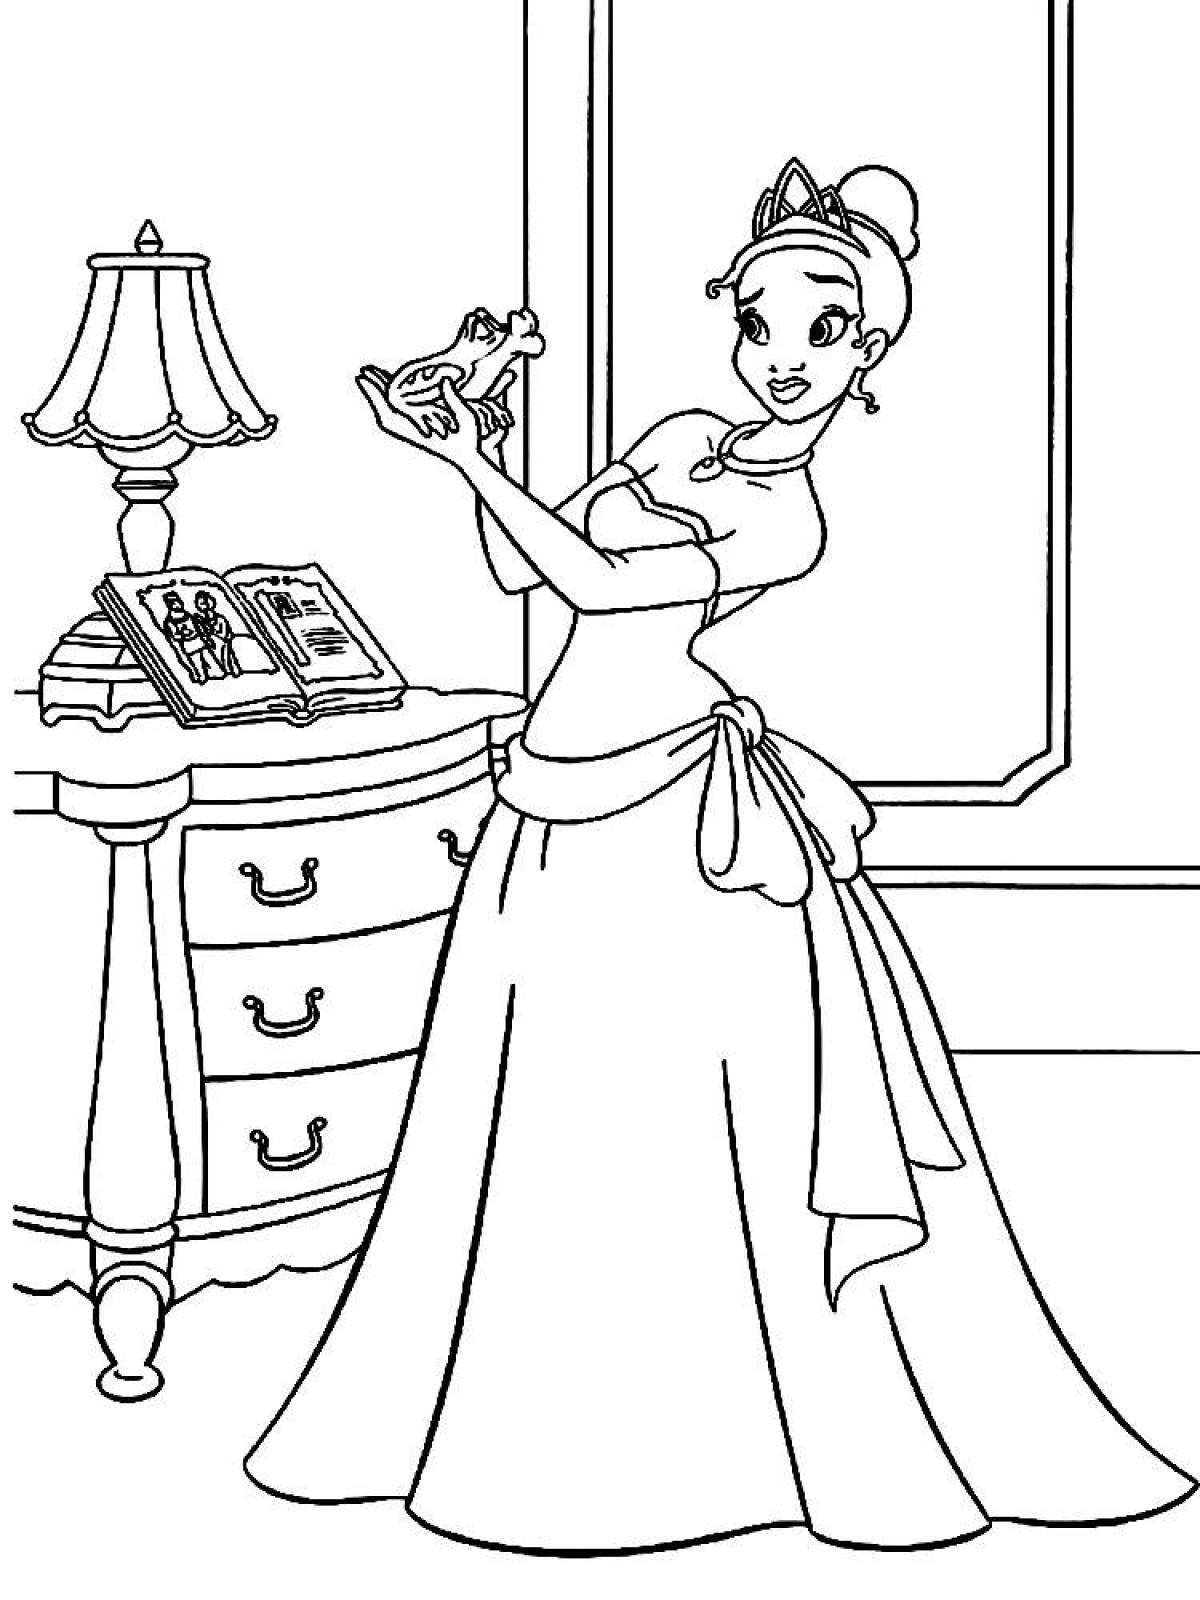 Disney princess glitter coloring book